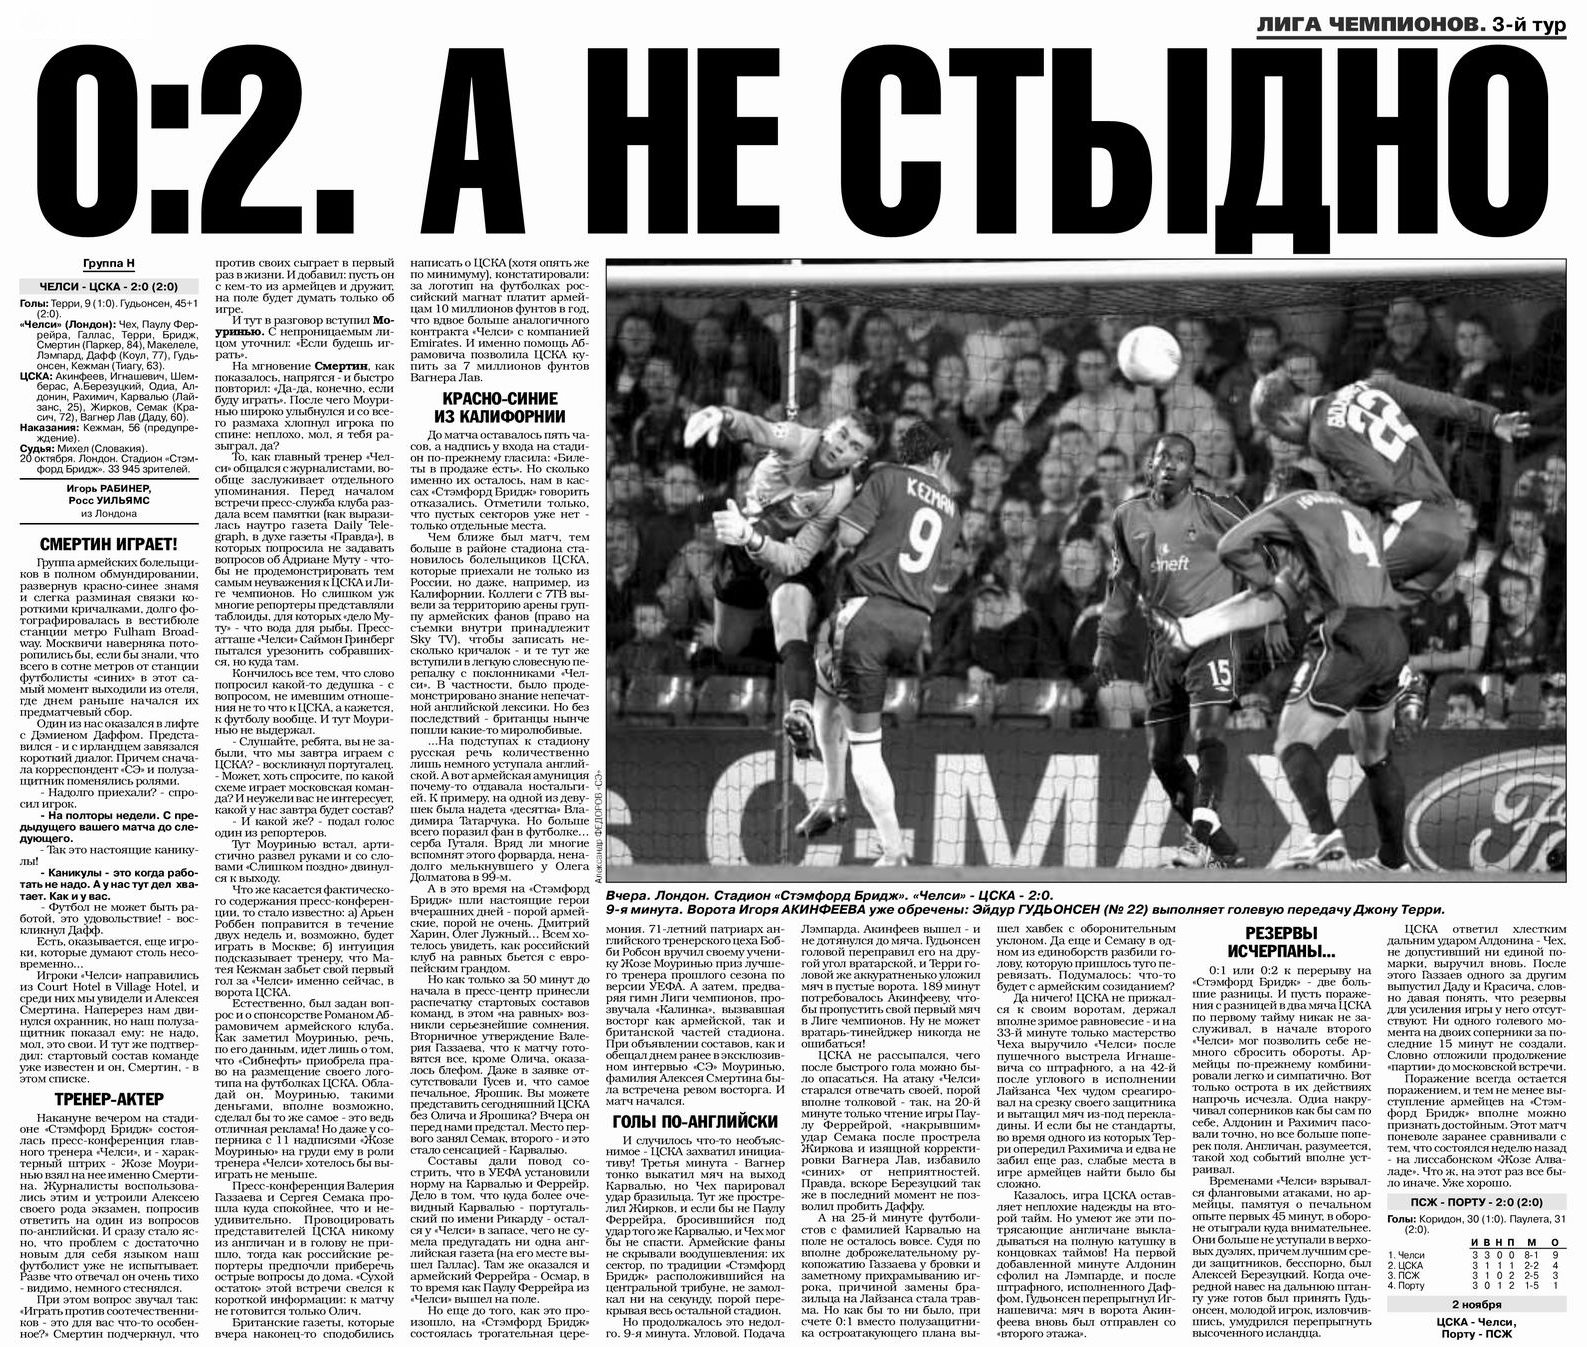 2004-10-20.Chelsea-CSKA.2